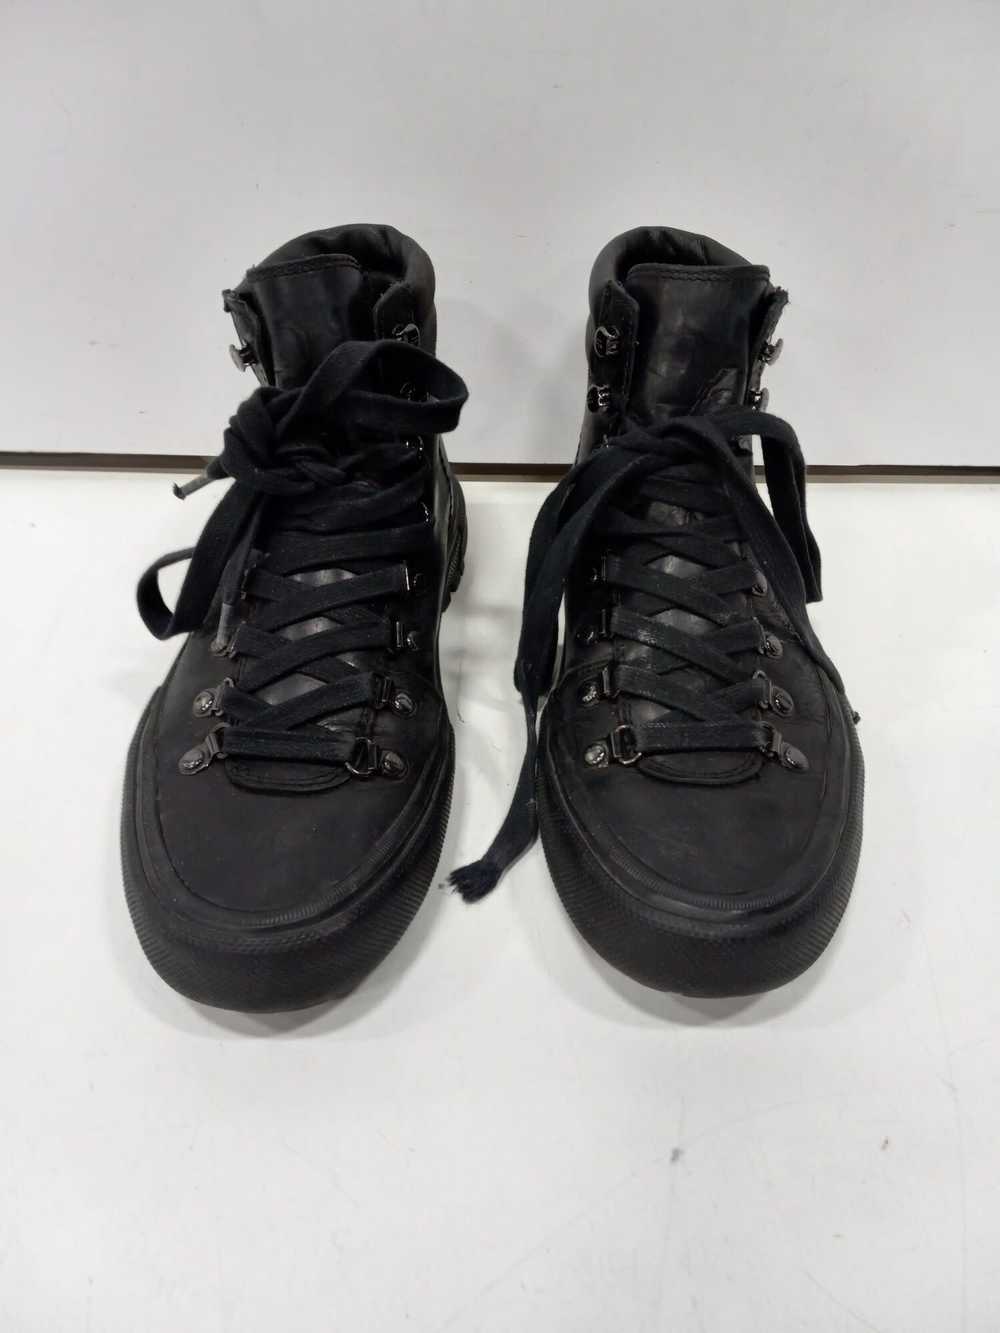 Frye Women's Black Boots Size 7 - image 2